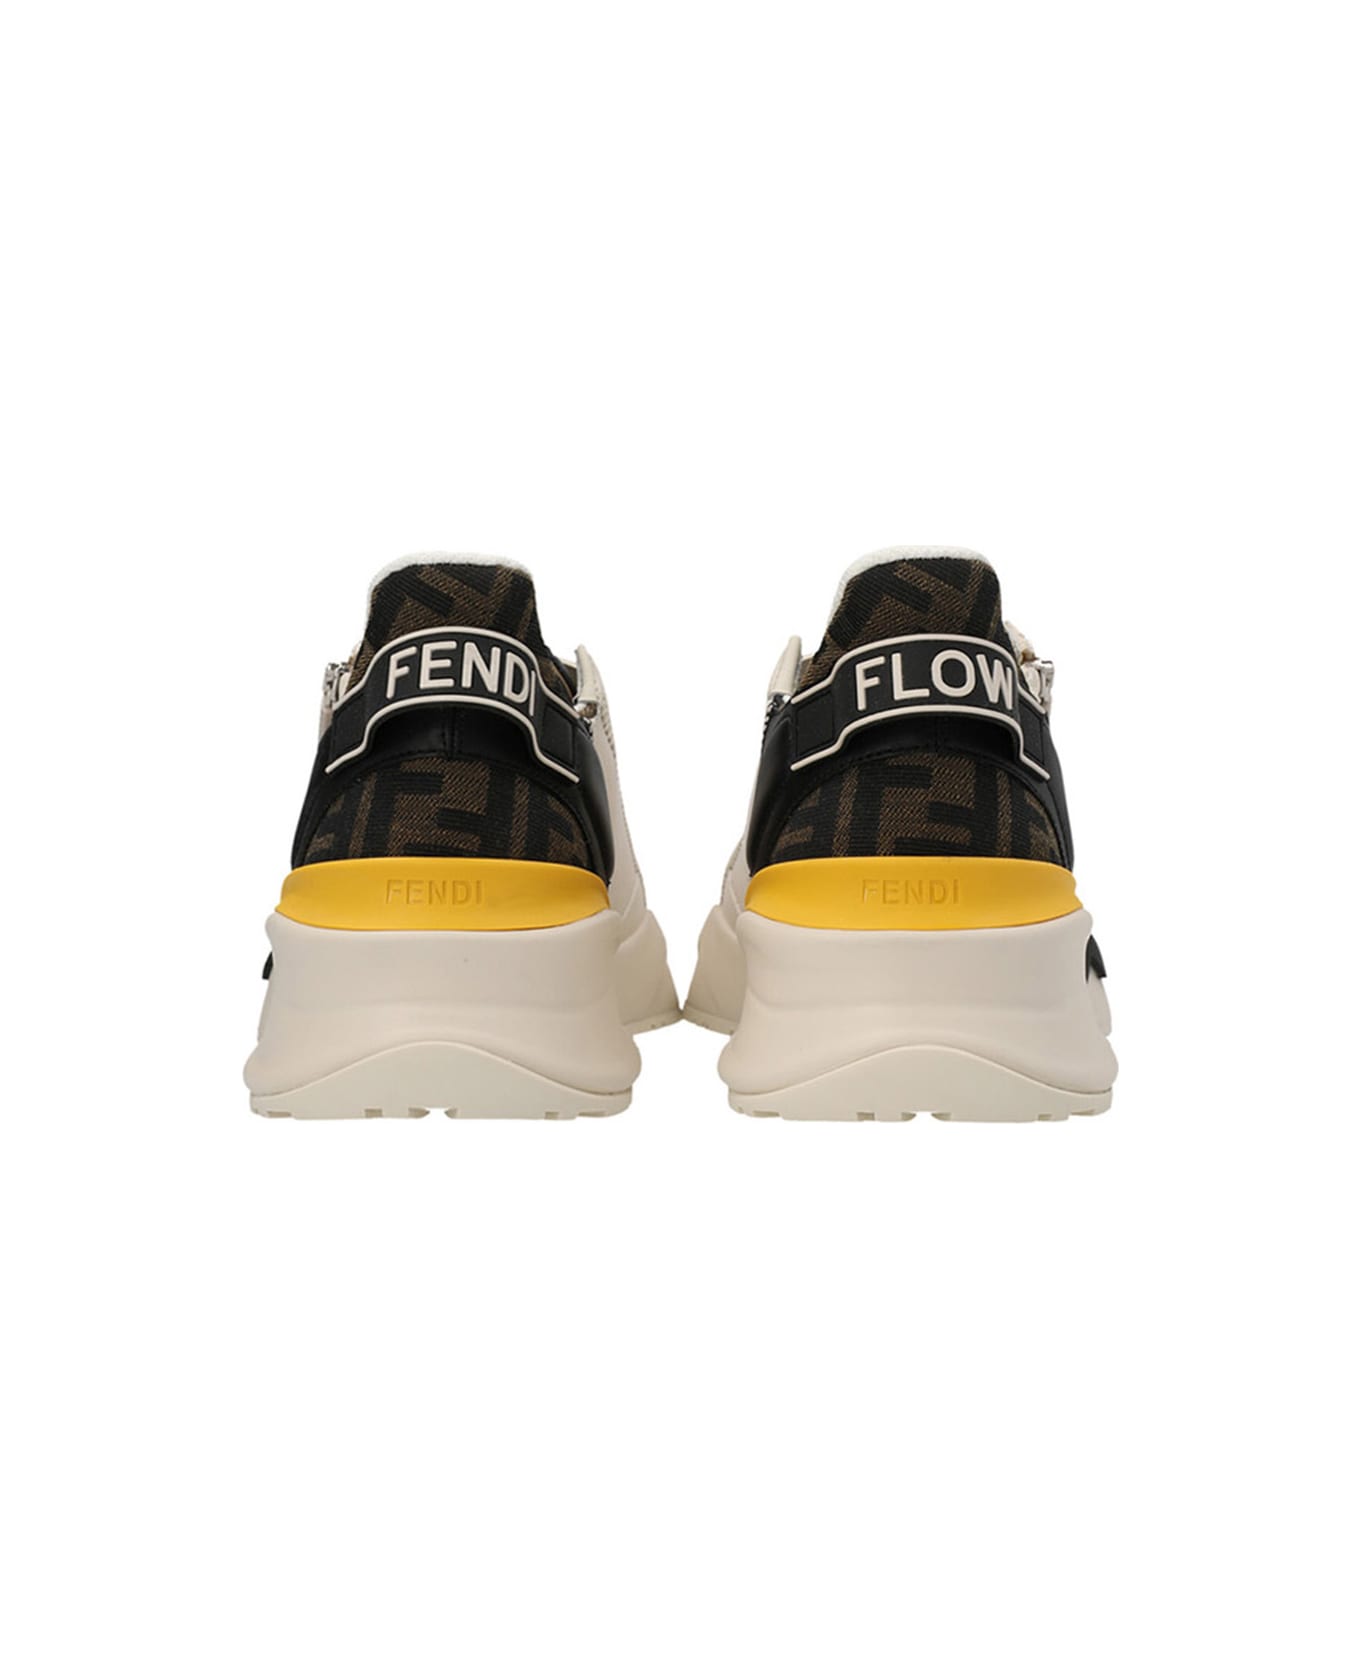 Fendi 'flow' Sneakers - Multicolor スニーカー